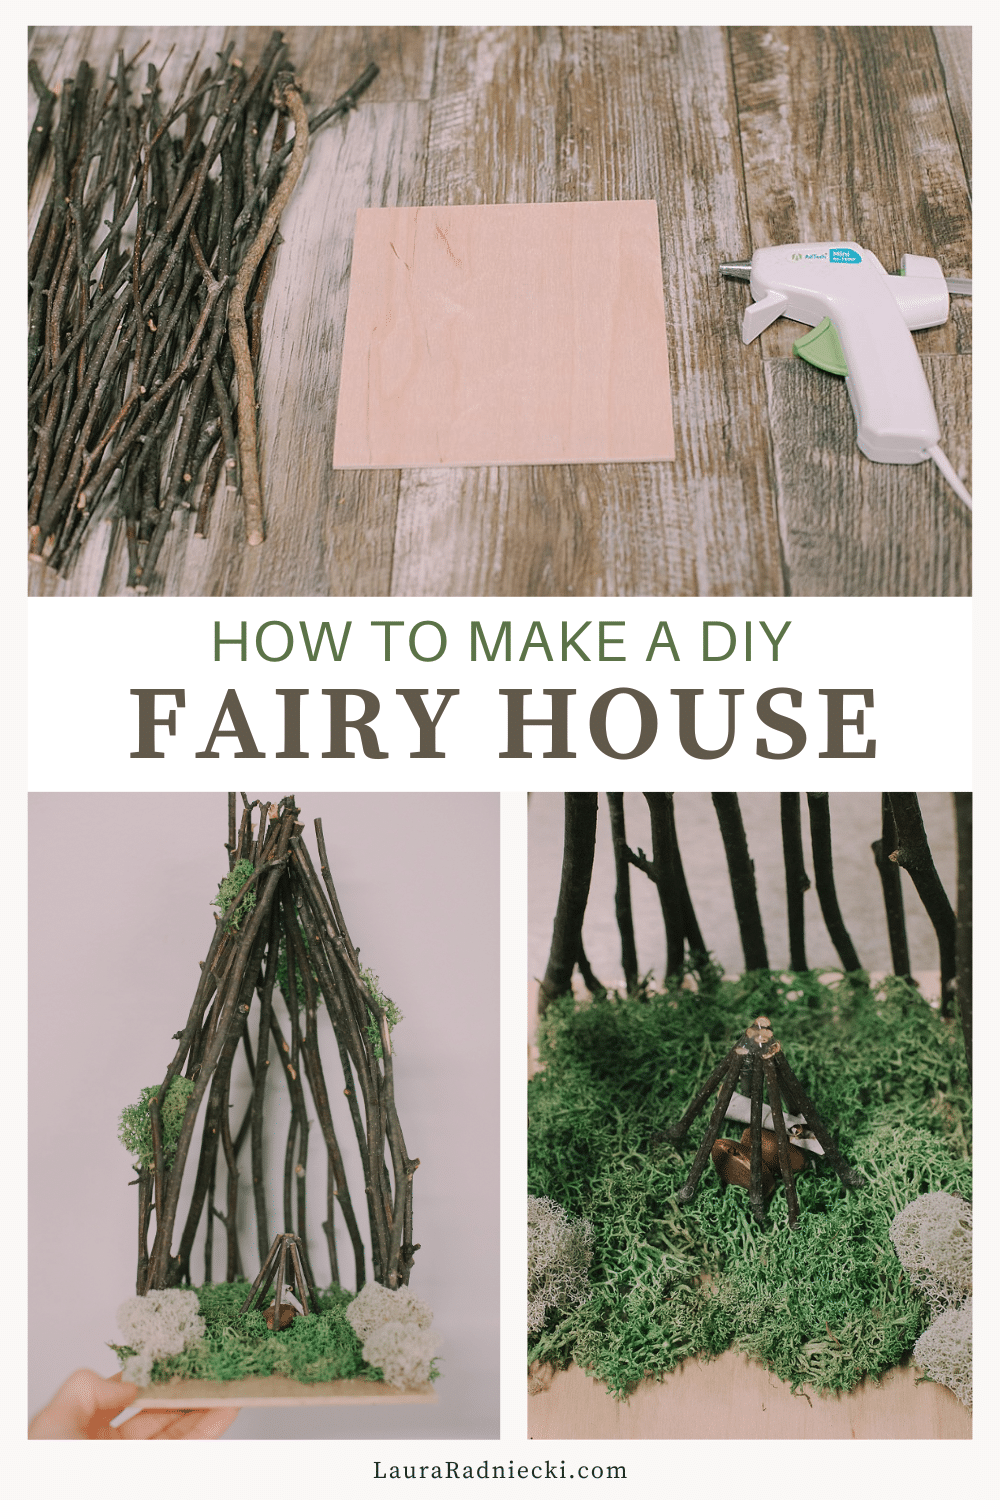 How to Make a Fairy House